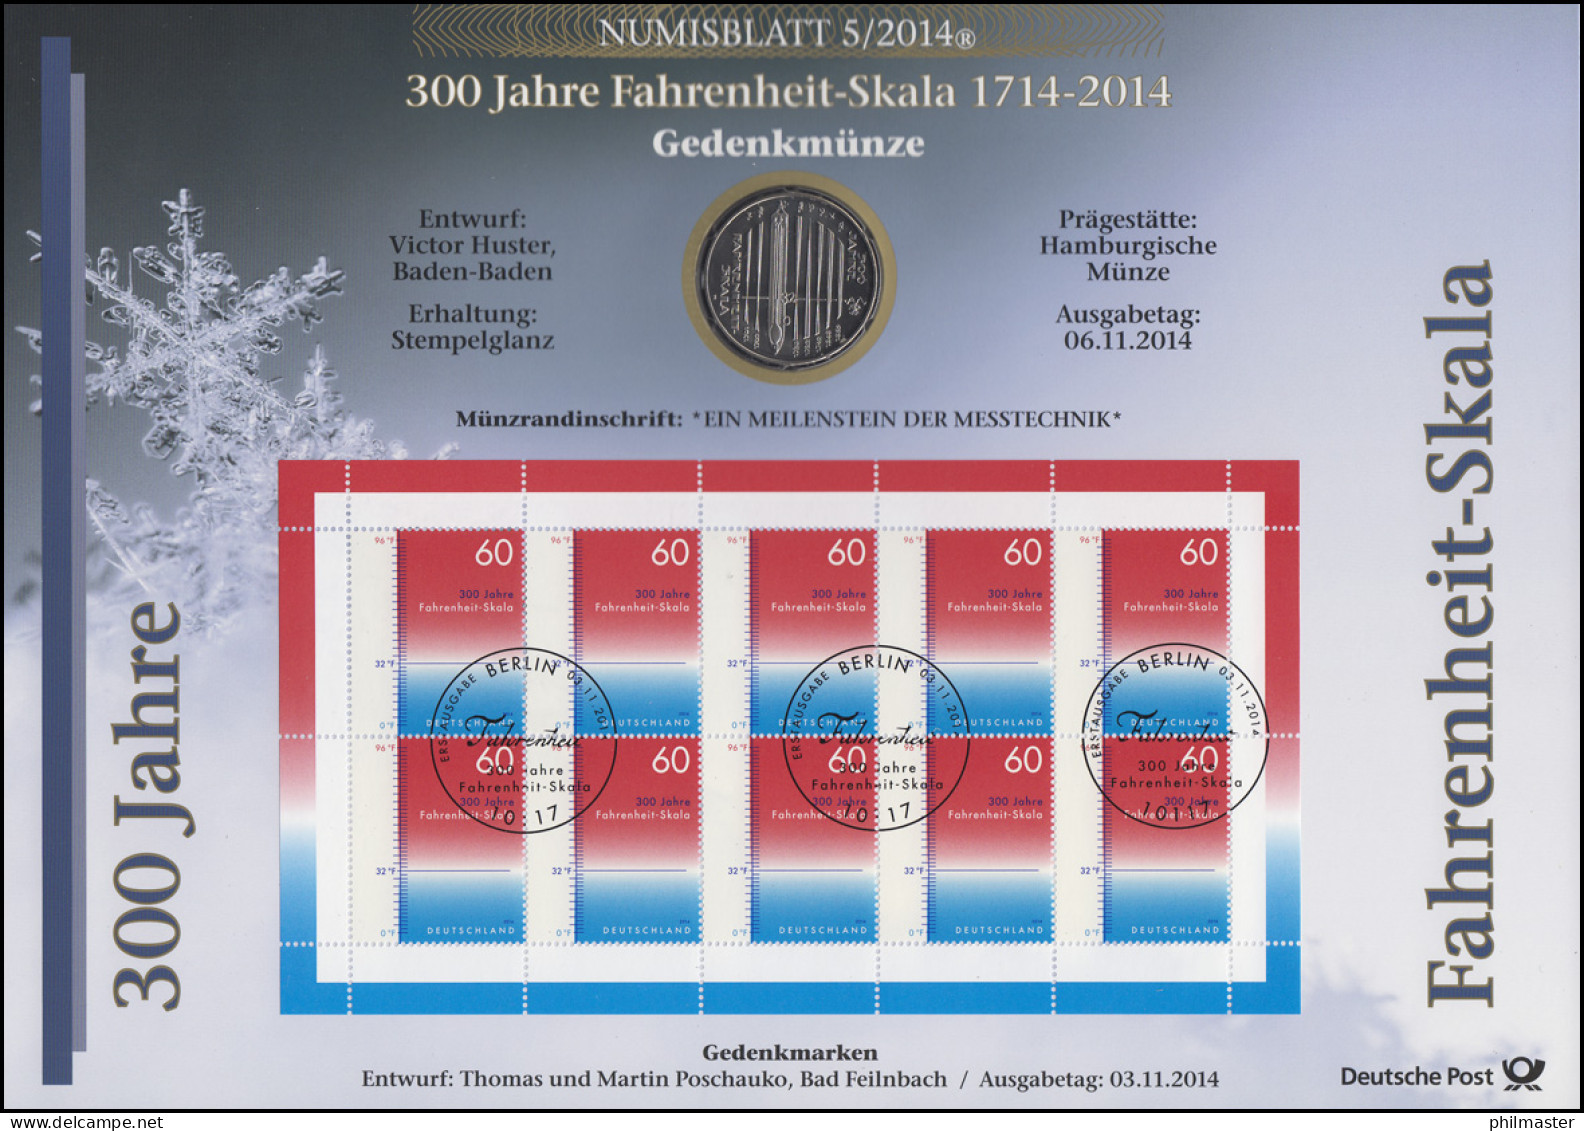 3109 300 Jahre Fahrenheit-Skala - Numisblatt 5/2014 - Enveloppes Numismatiques